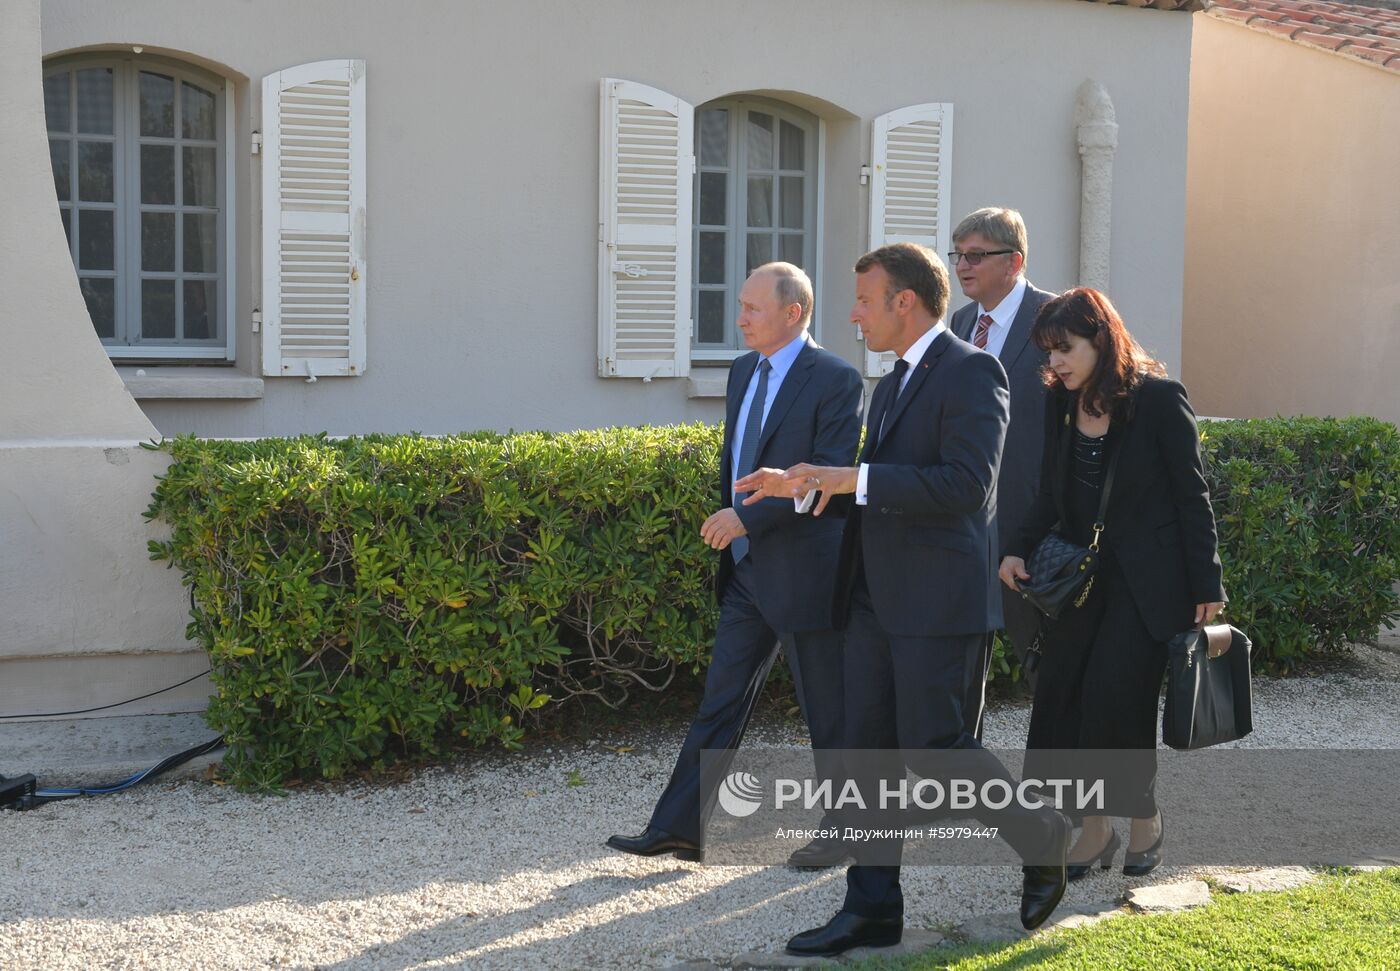 Рабочий визит президента РФ В. Путина во Францию